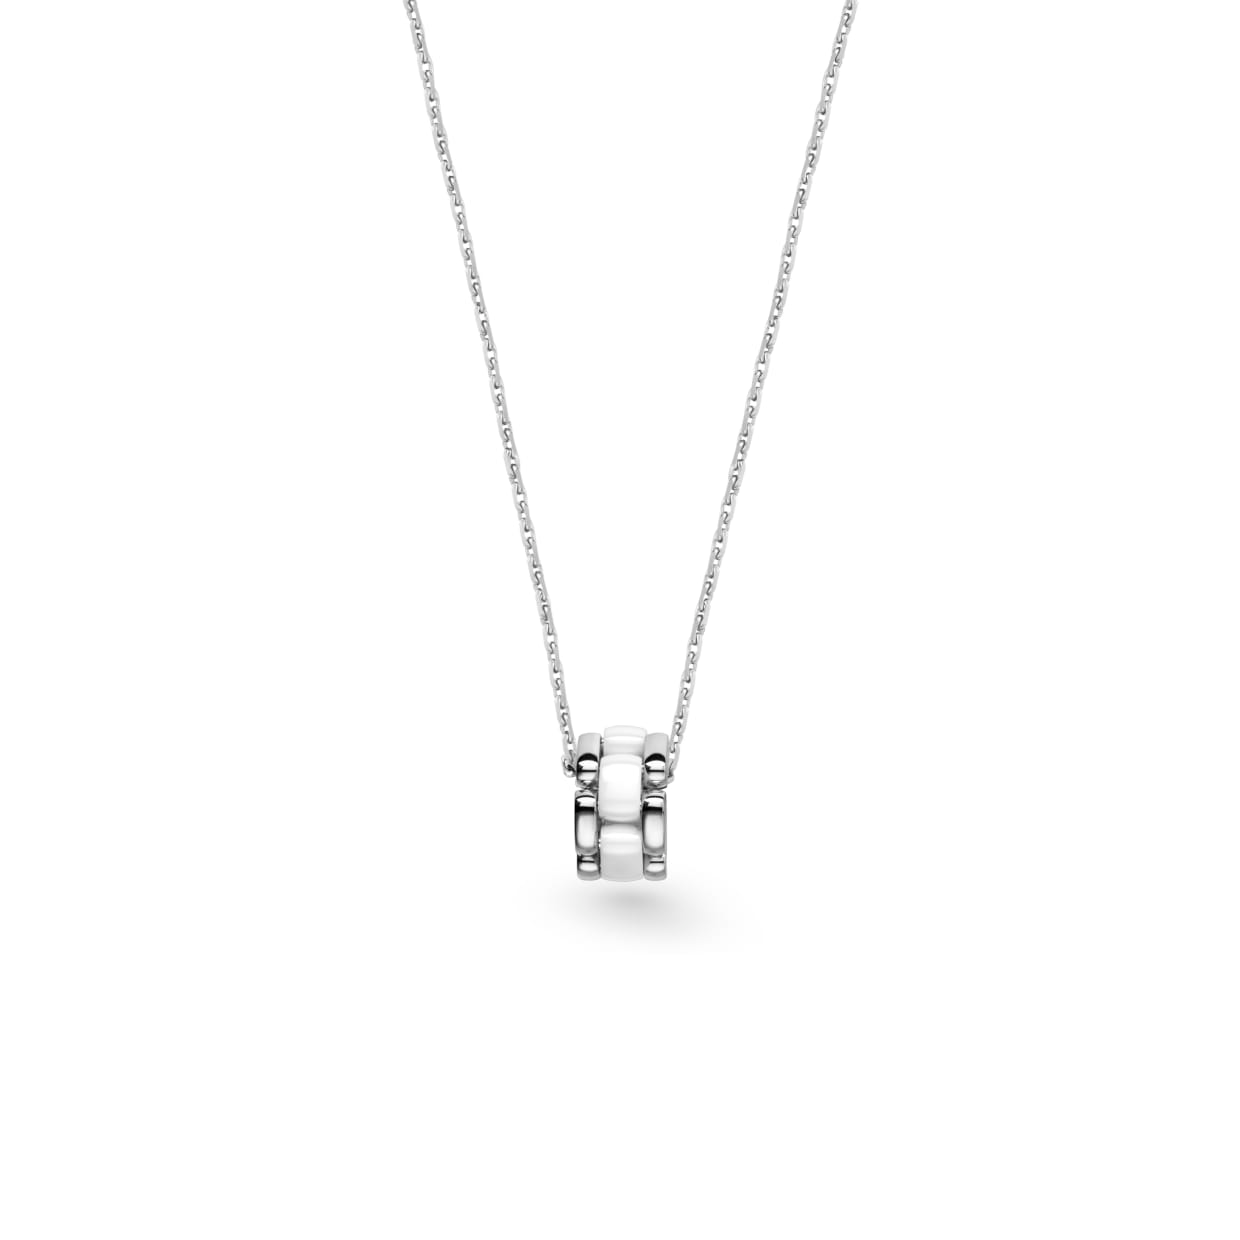 Wholesale OEM/ODM Jewelry OEM necklace in 18K white gold, white ceramic Silver Pendant Design